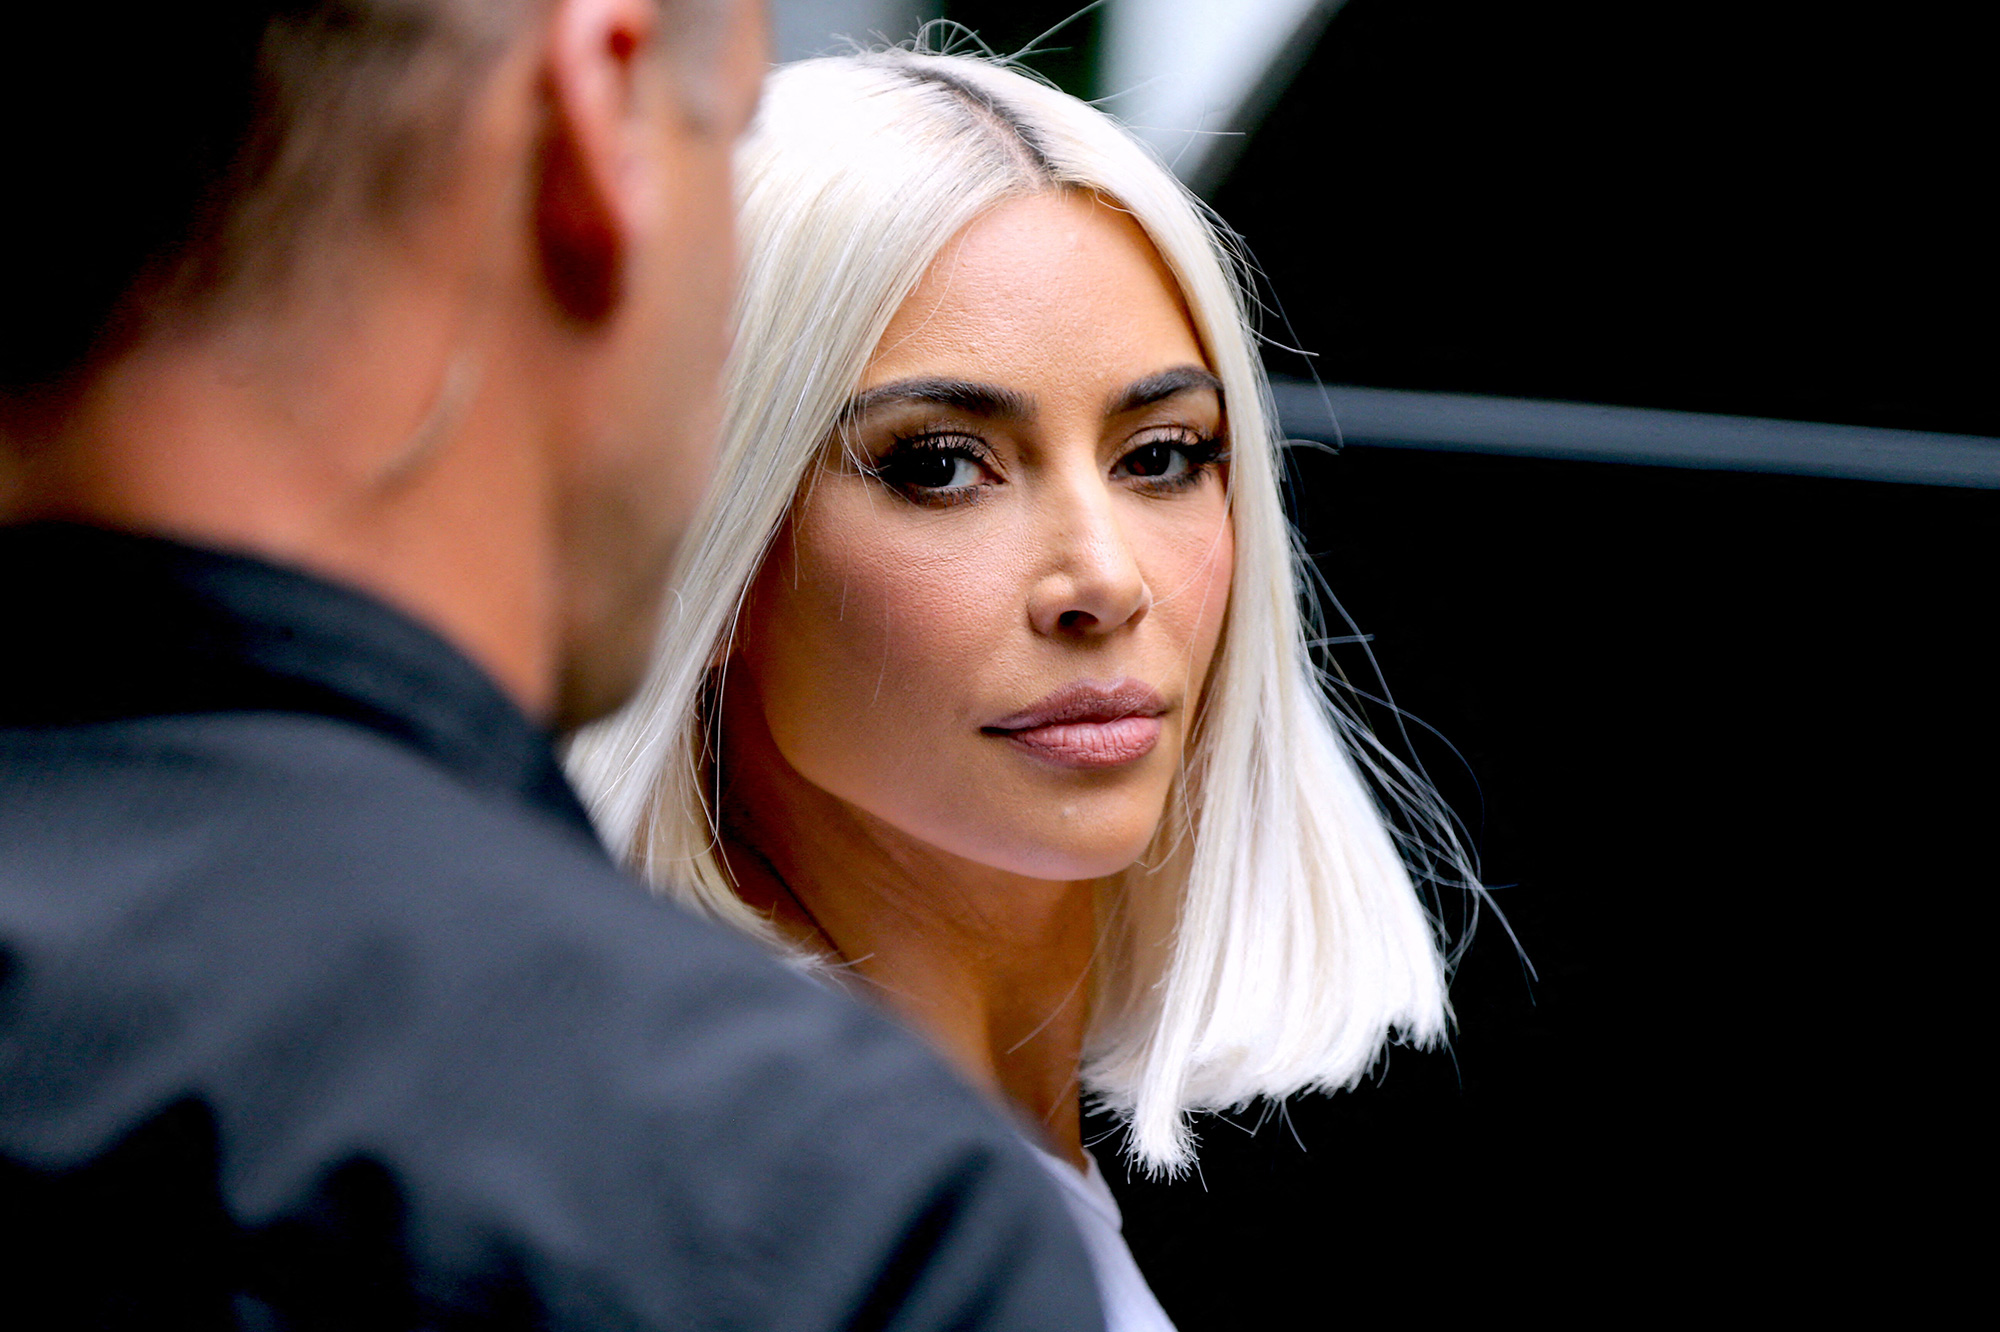 Kim Kardashian and cosmetic surgery: "I calmed down"